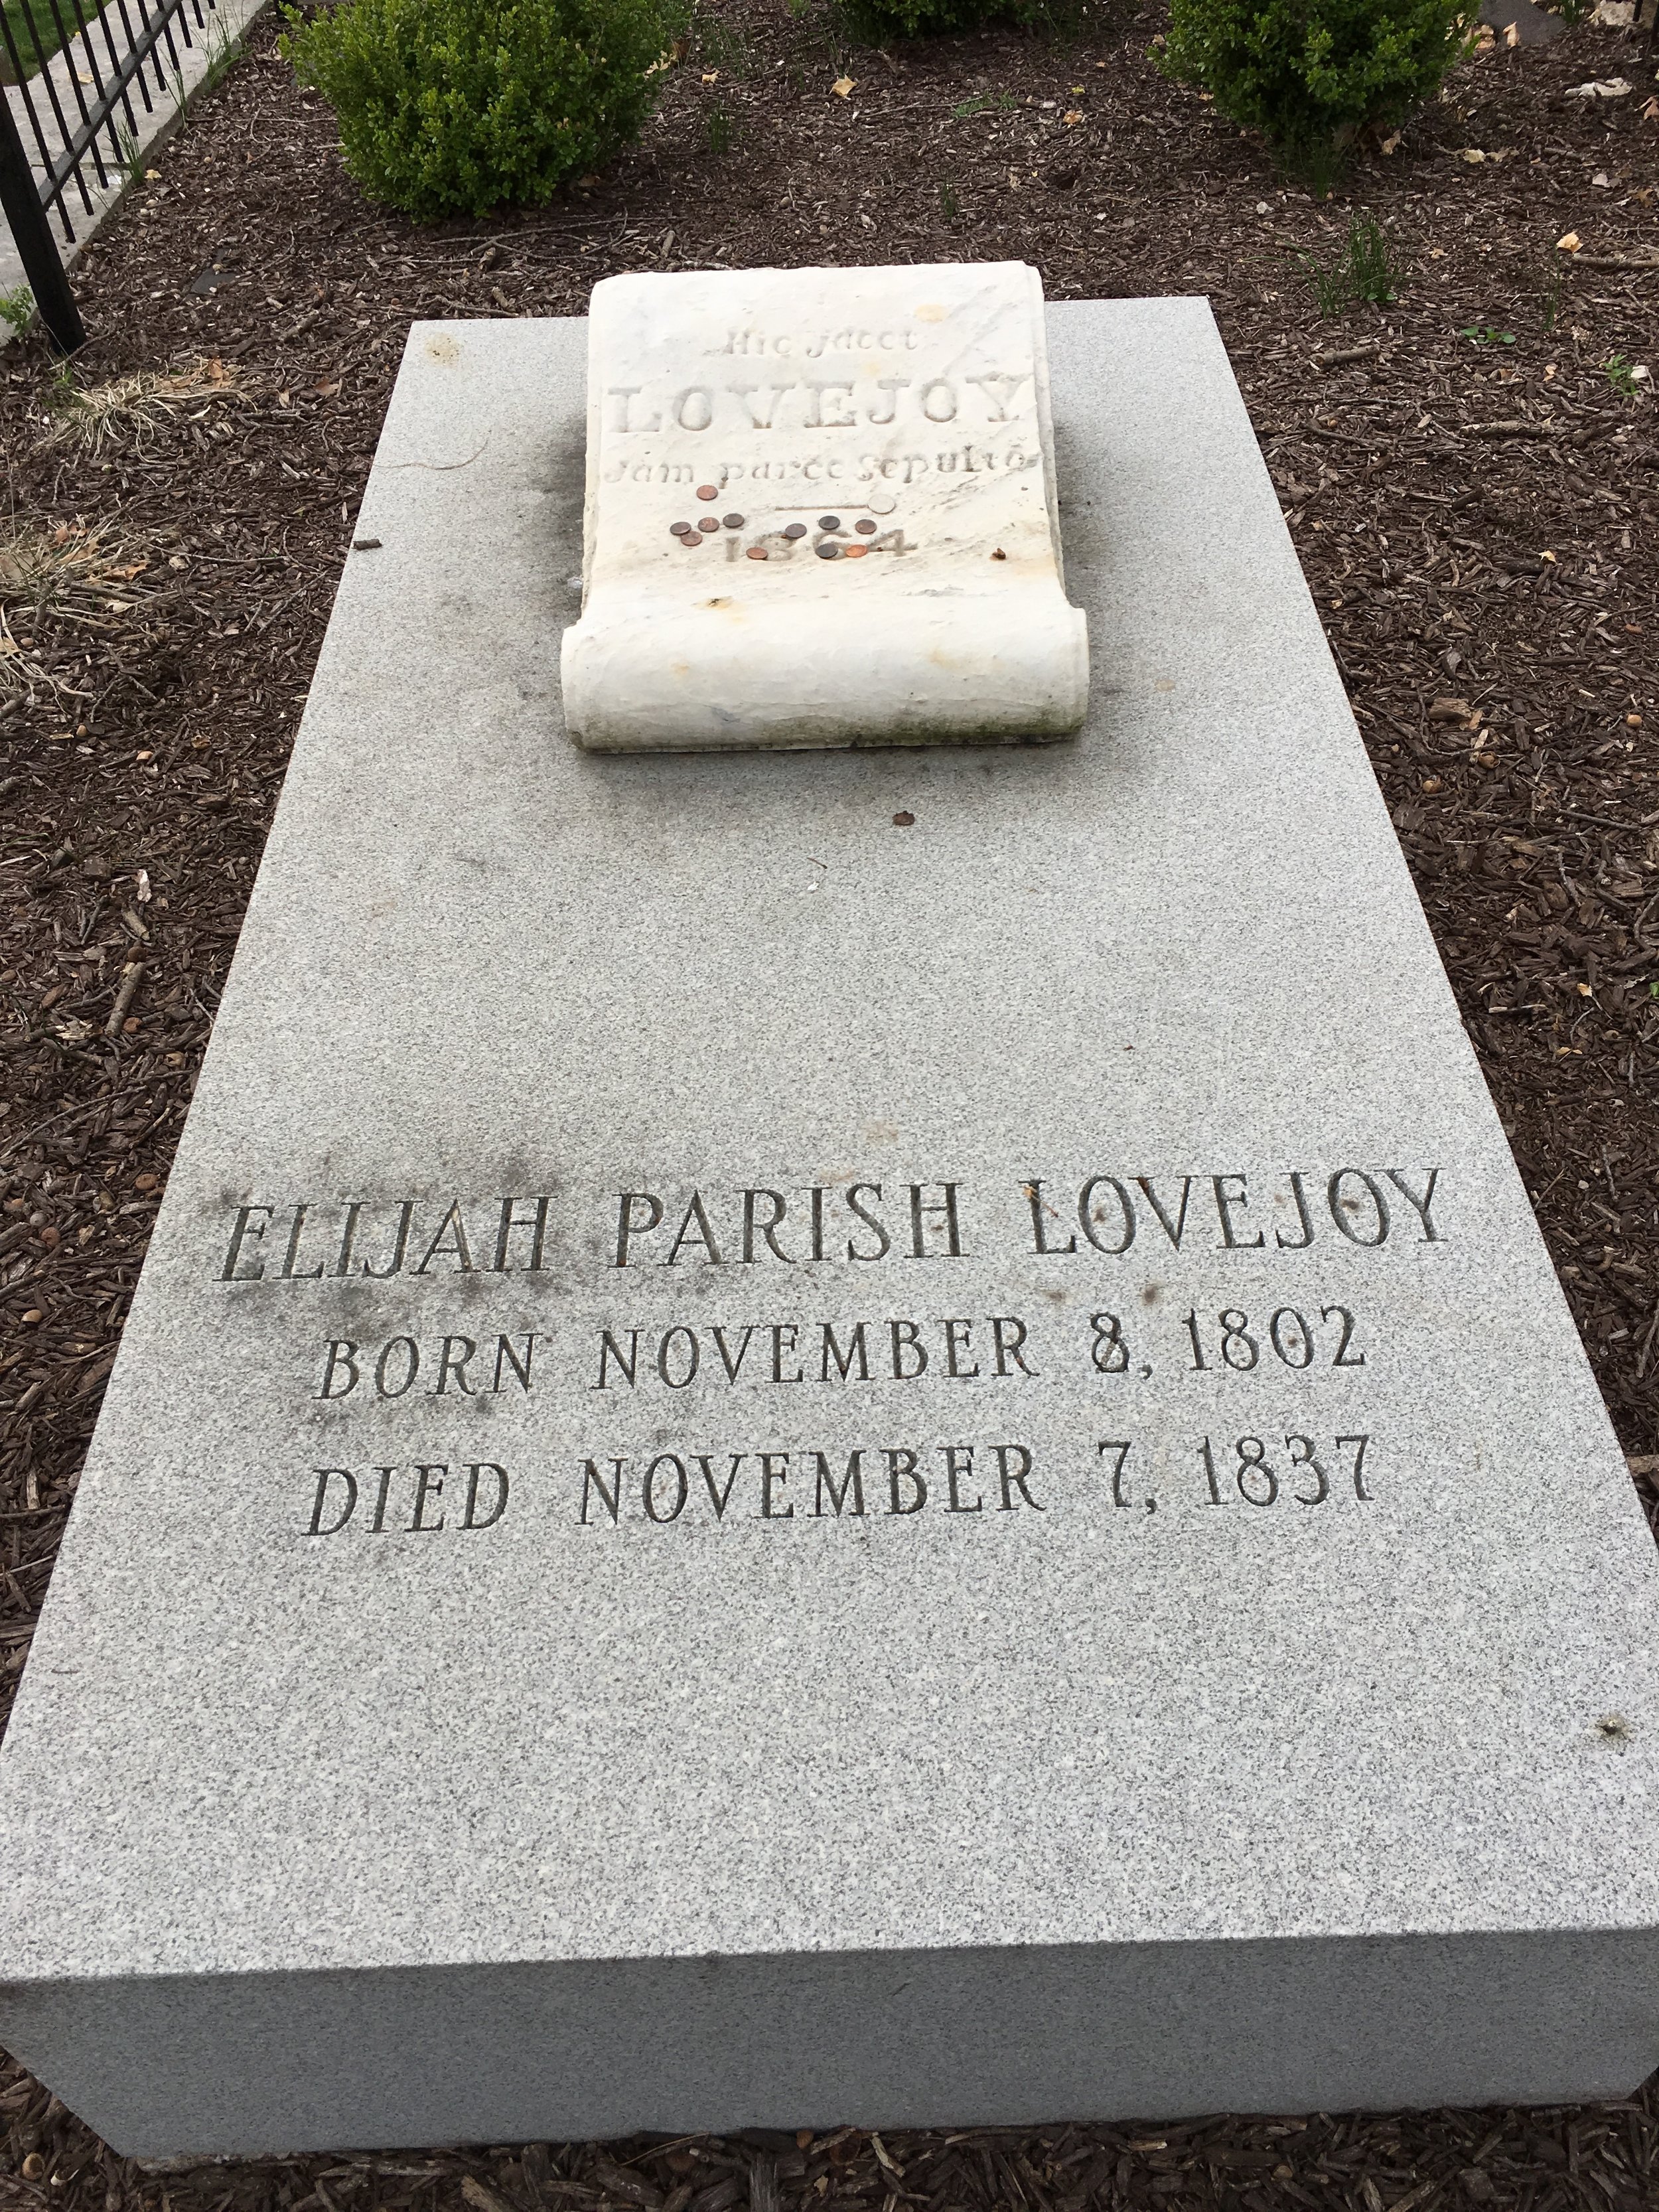  A grave marker near the monument to Elijah Parish Lovejoy in Alton, Ill. 